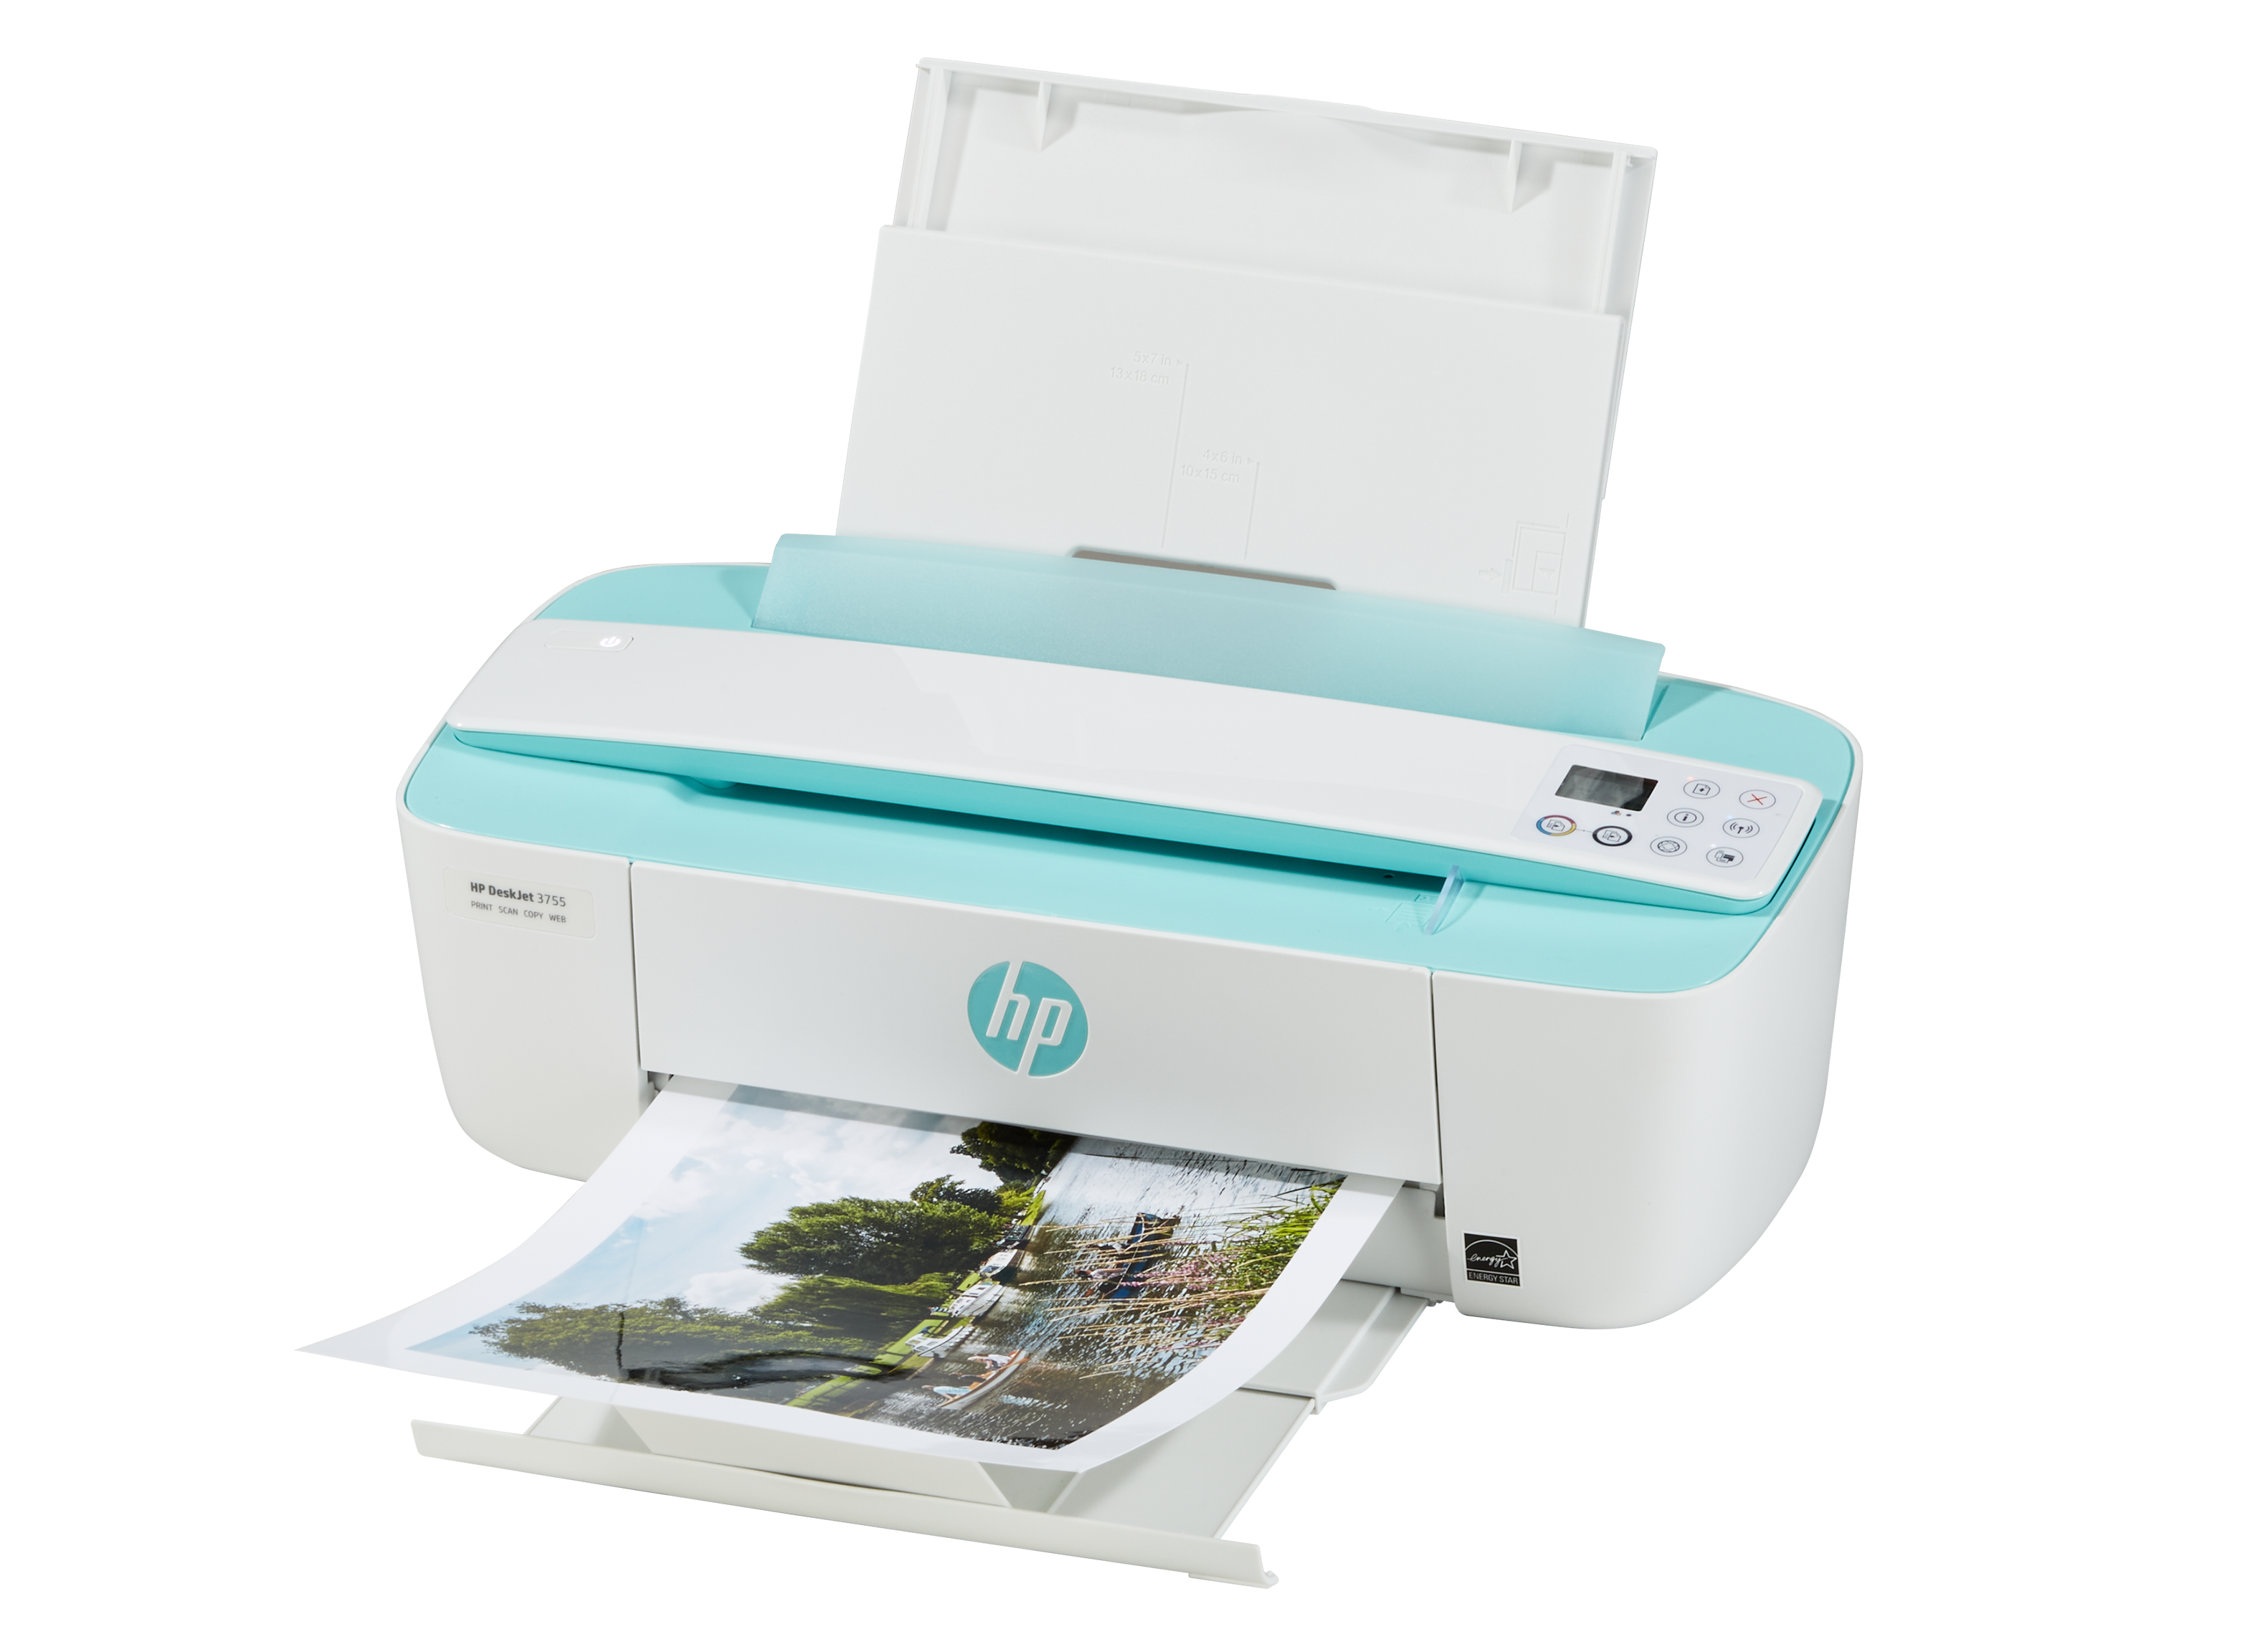 Lappe Lyn navigation HP DeskJet 3755 Printer Review - Consumer Reports